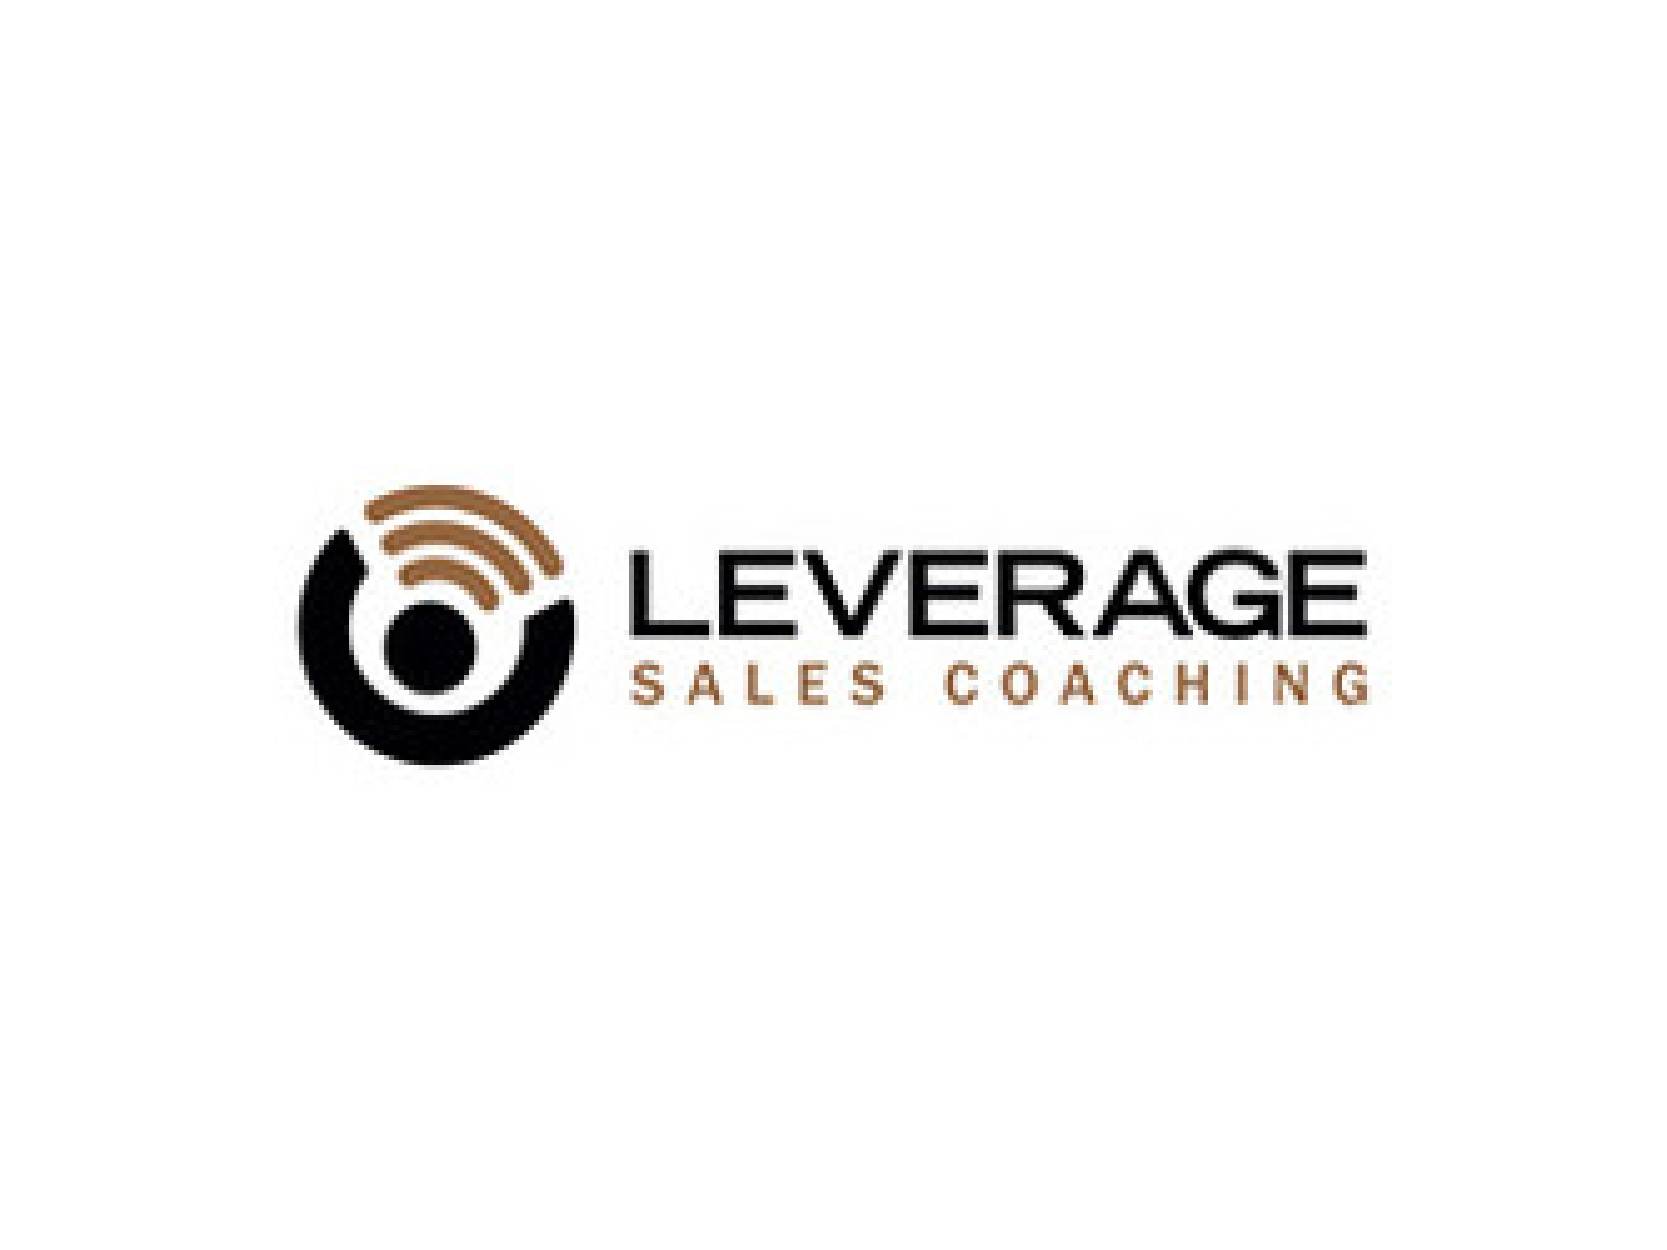  Leverage Sales Coaching